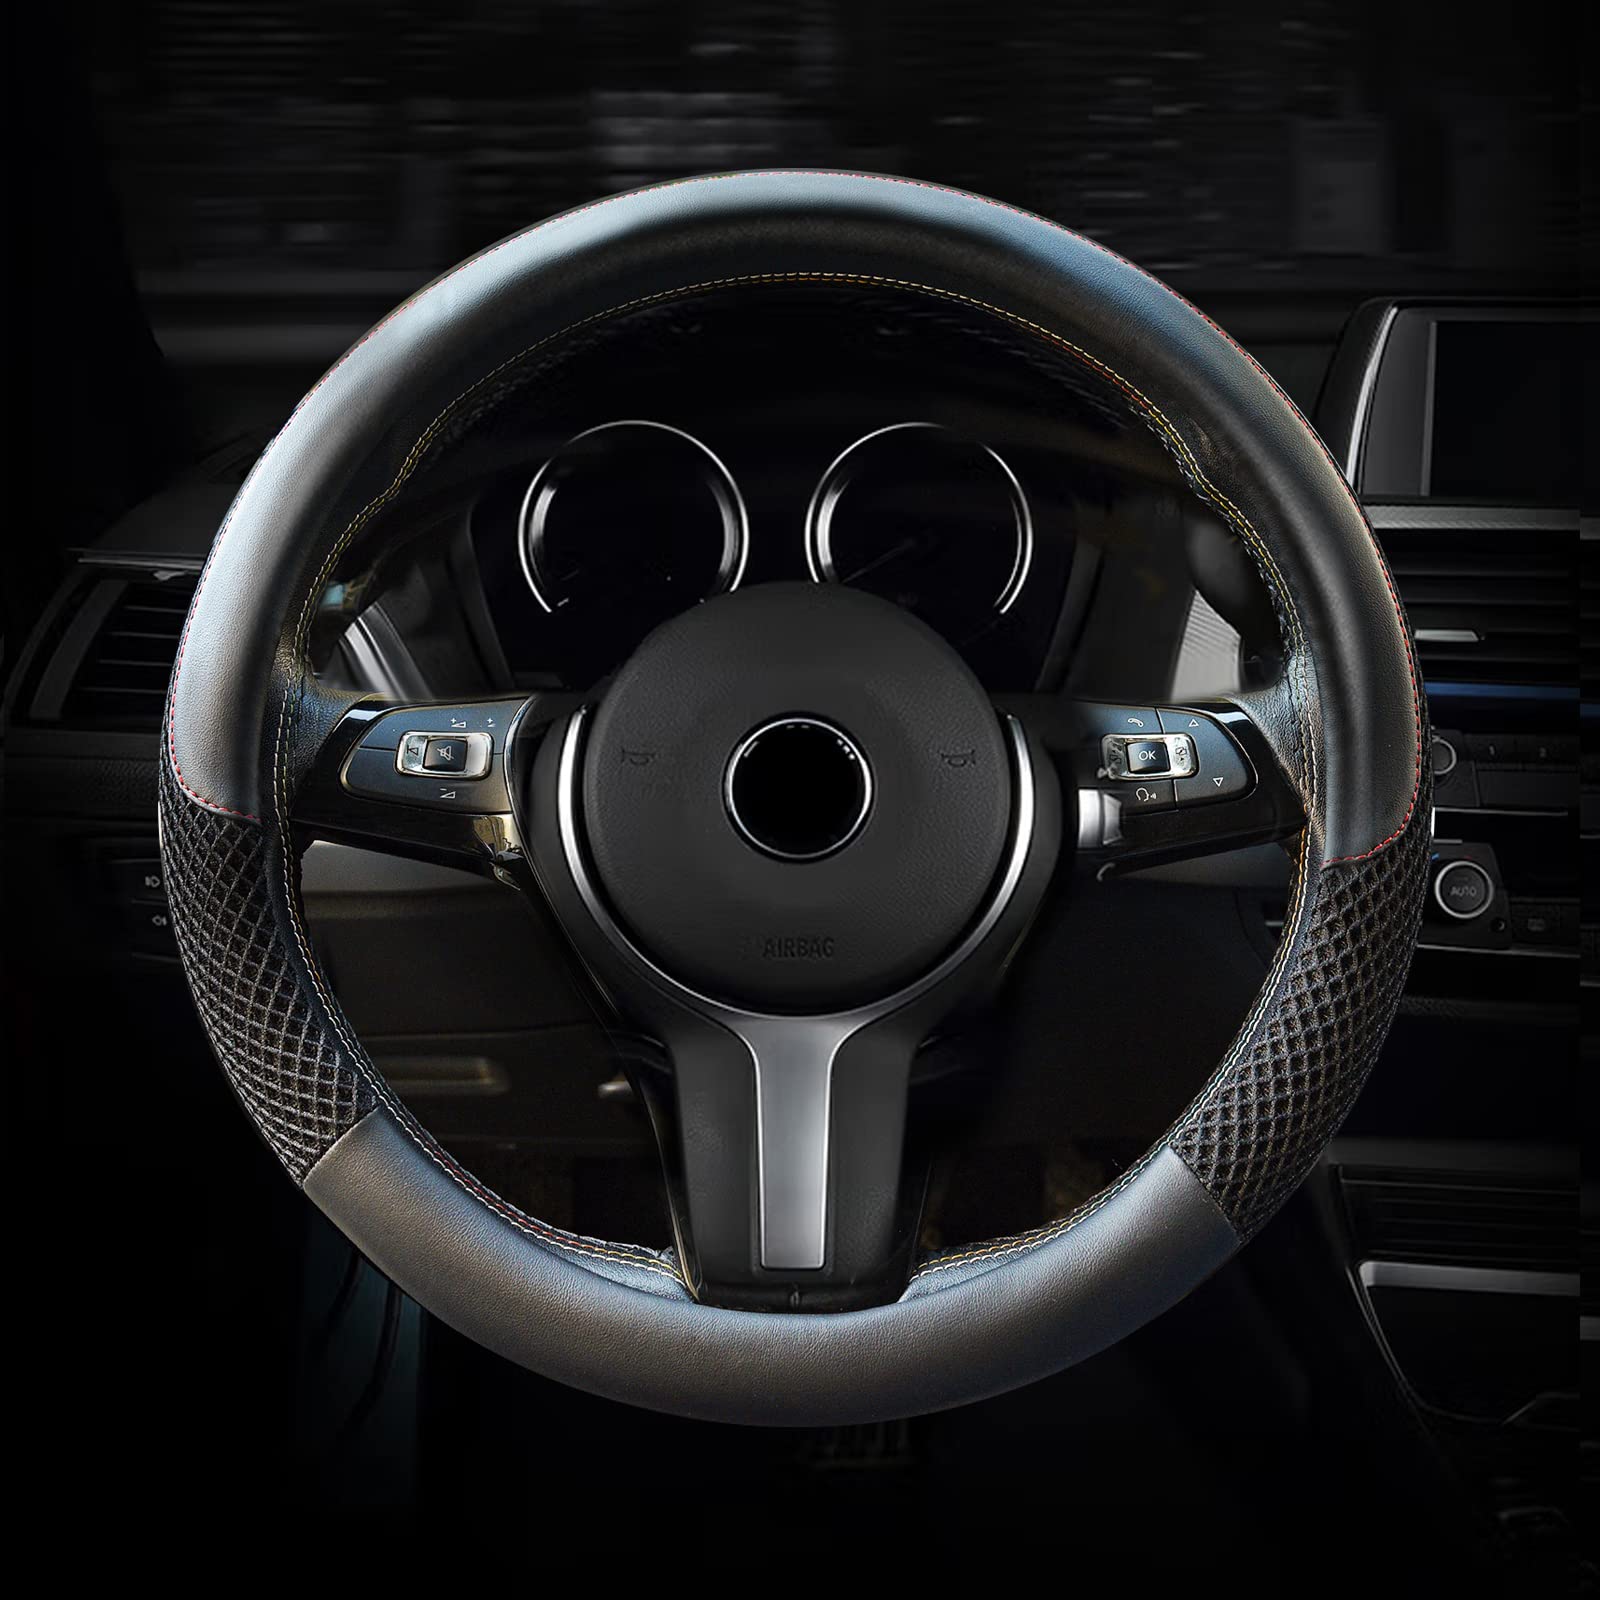 Carfond Breathable Microfiber Steering Wheel Cover,Anti Slip Ice Mesh Wheel  Protector Cover,Universal 15 inch Black